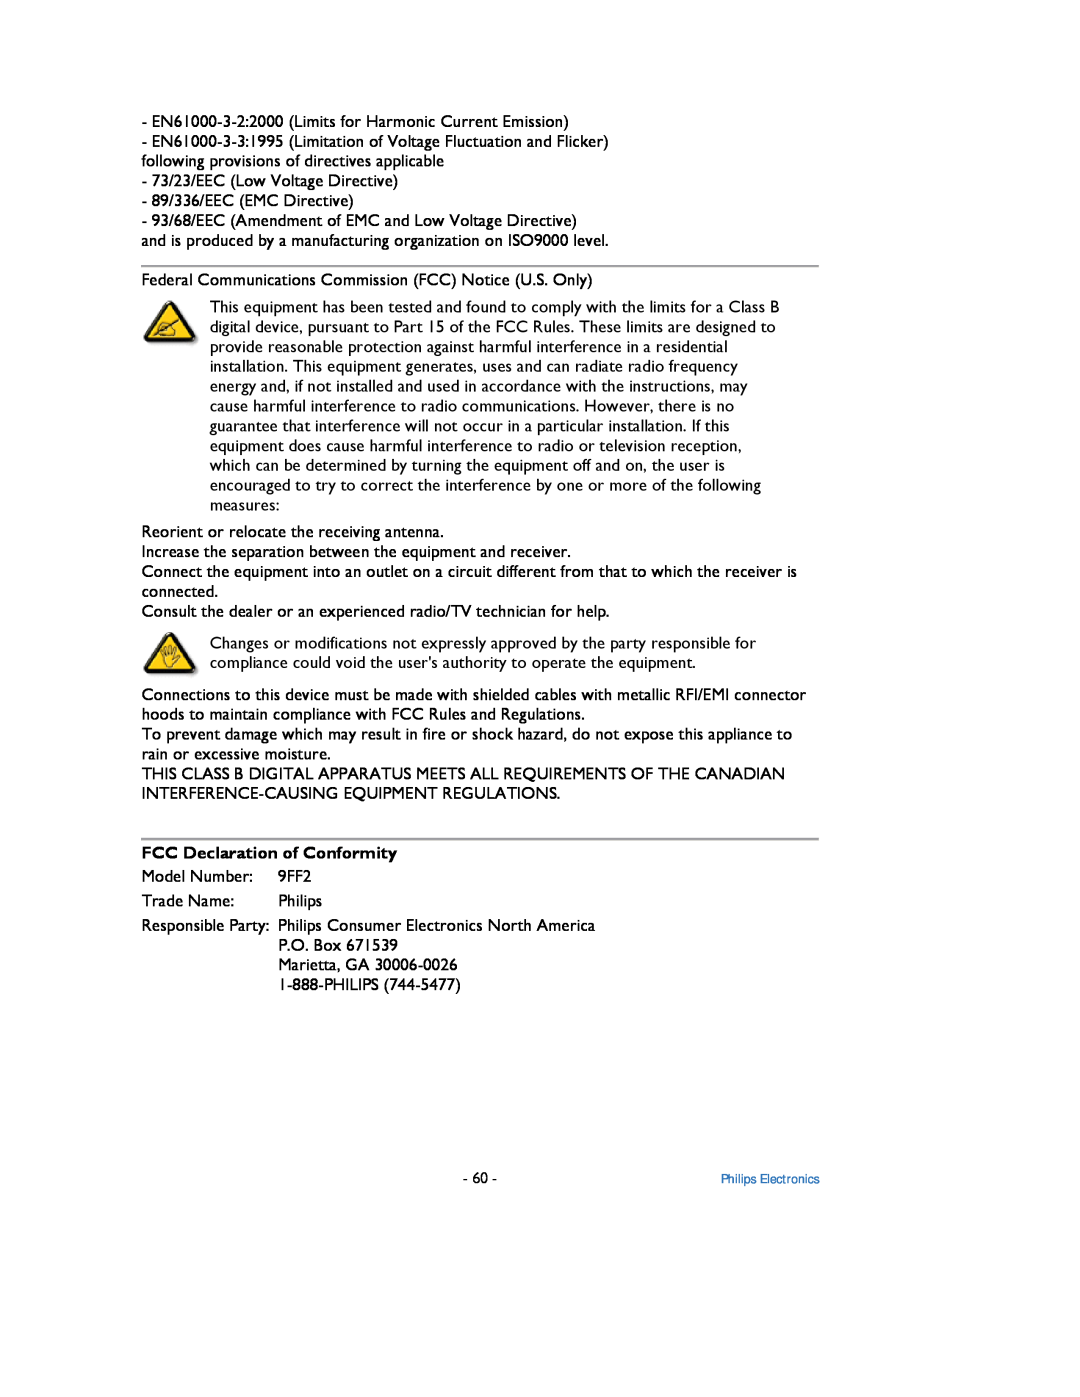 Philips 9FF2 user manual FCC Declaration of Conformity 